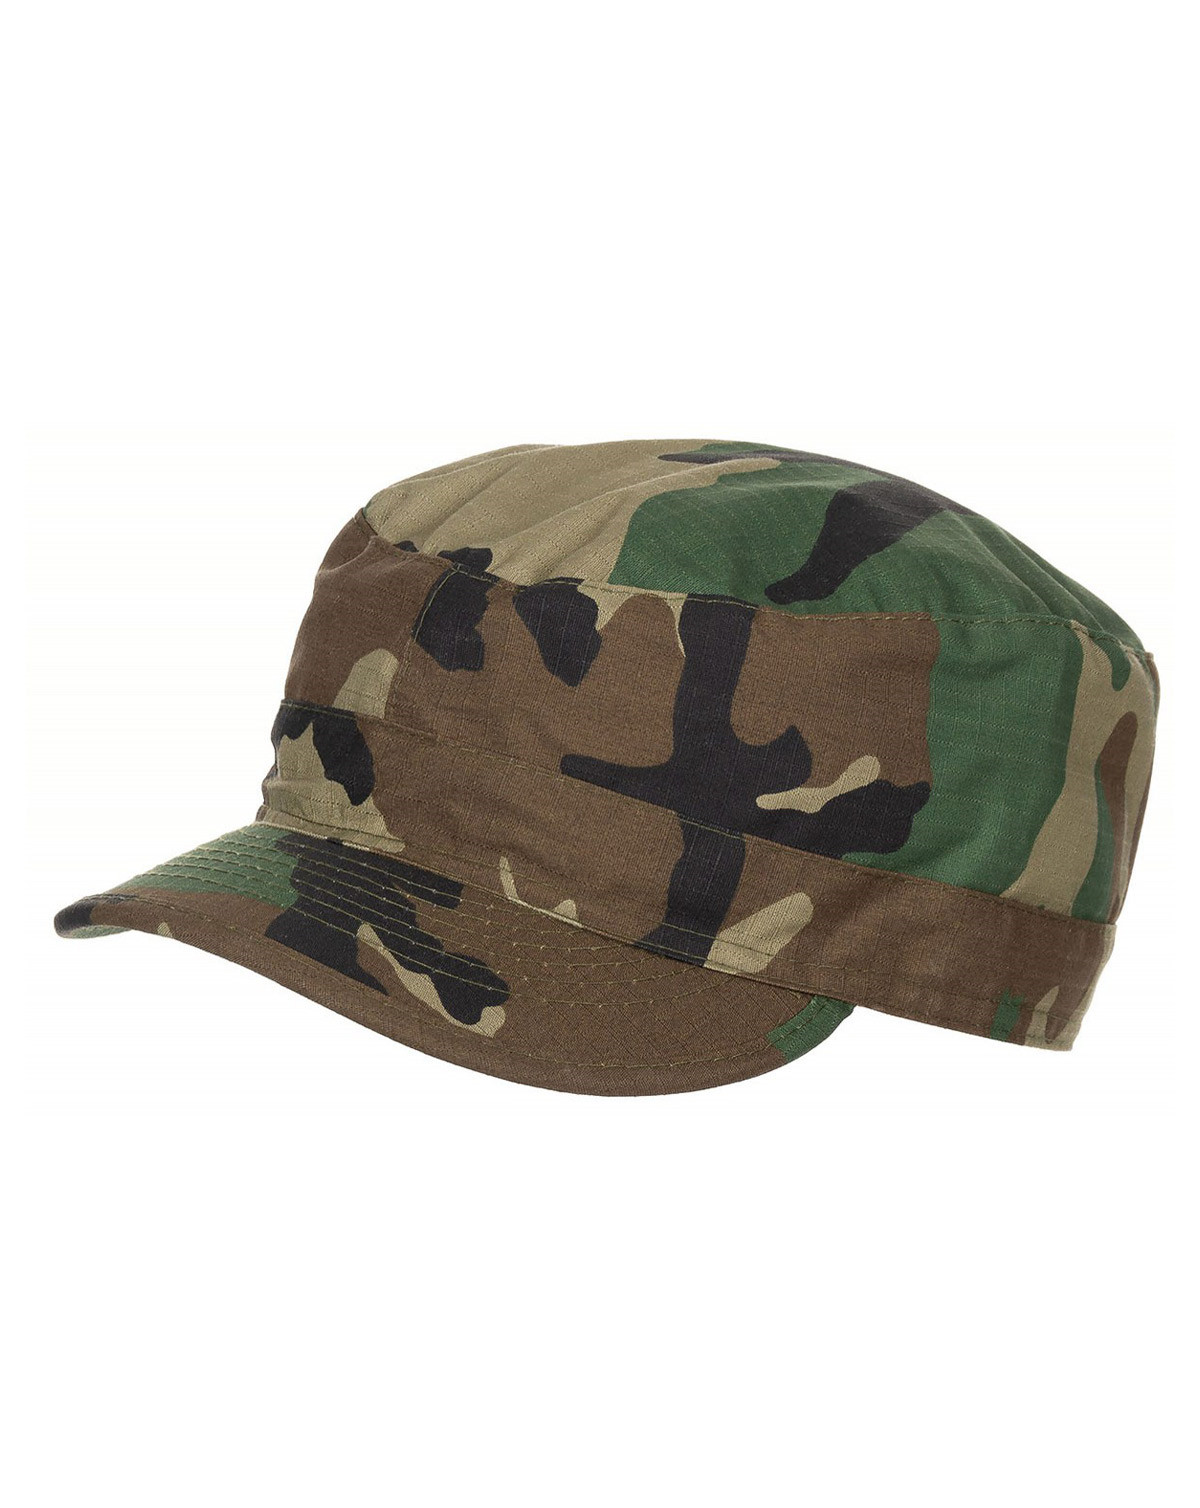 #3 - MFH U.S. Army Caps (Woodland Ripstop, XL)